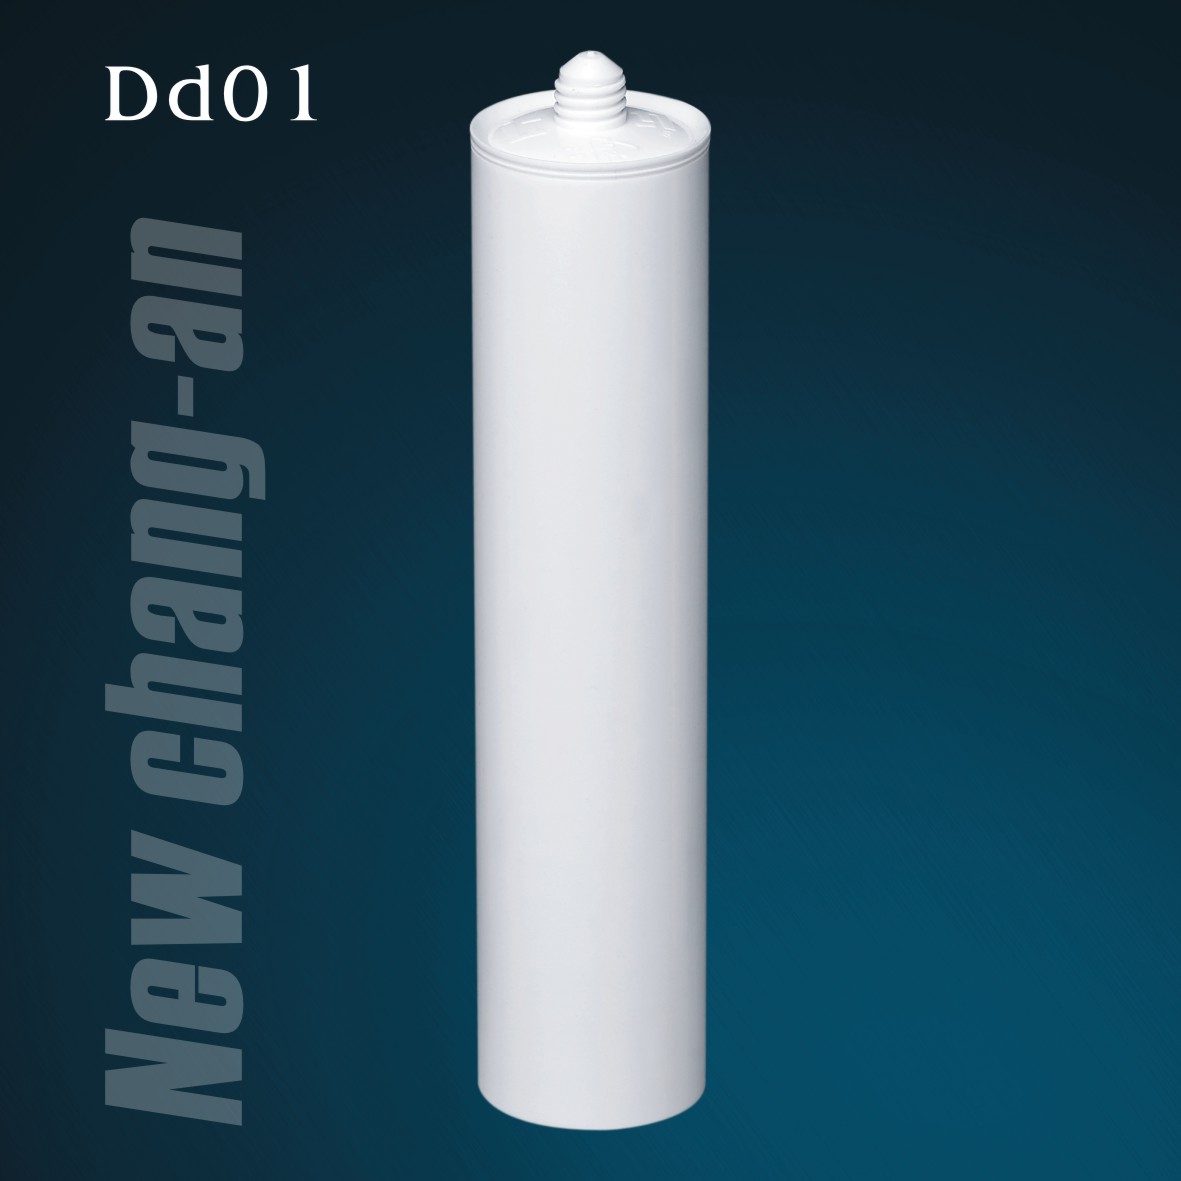 Cartucho de plástico HDPE vacío de 300 ml para sellante de silicona Dd01